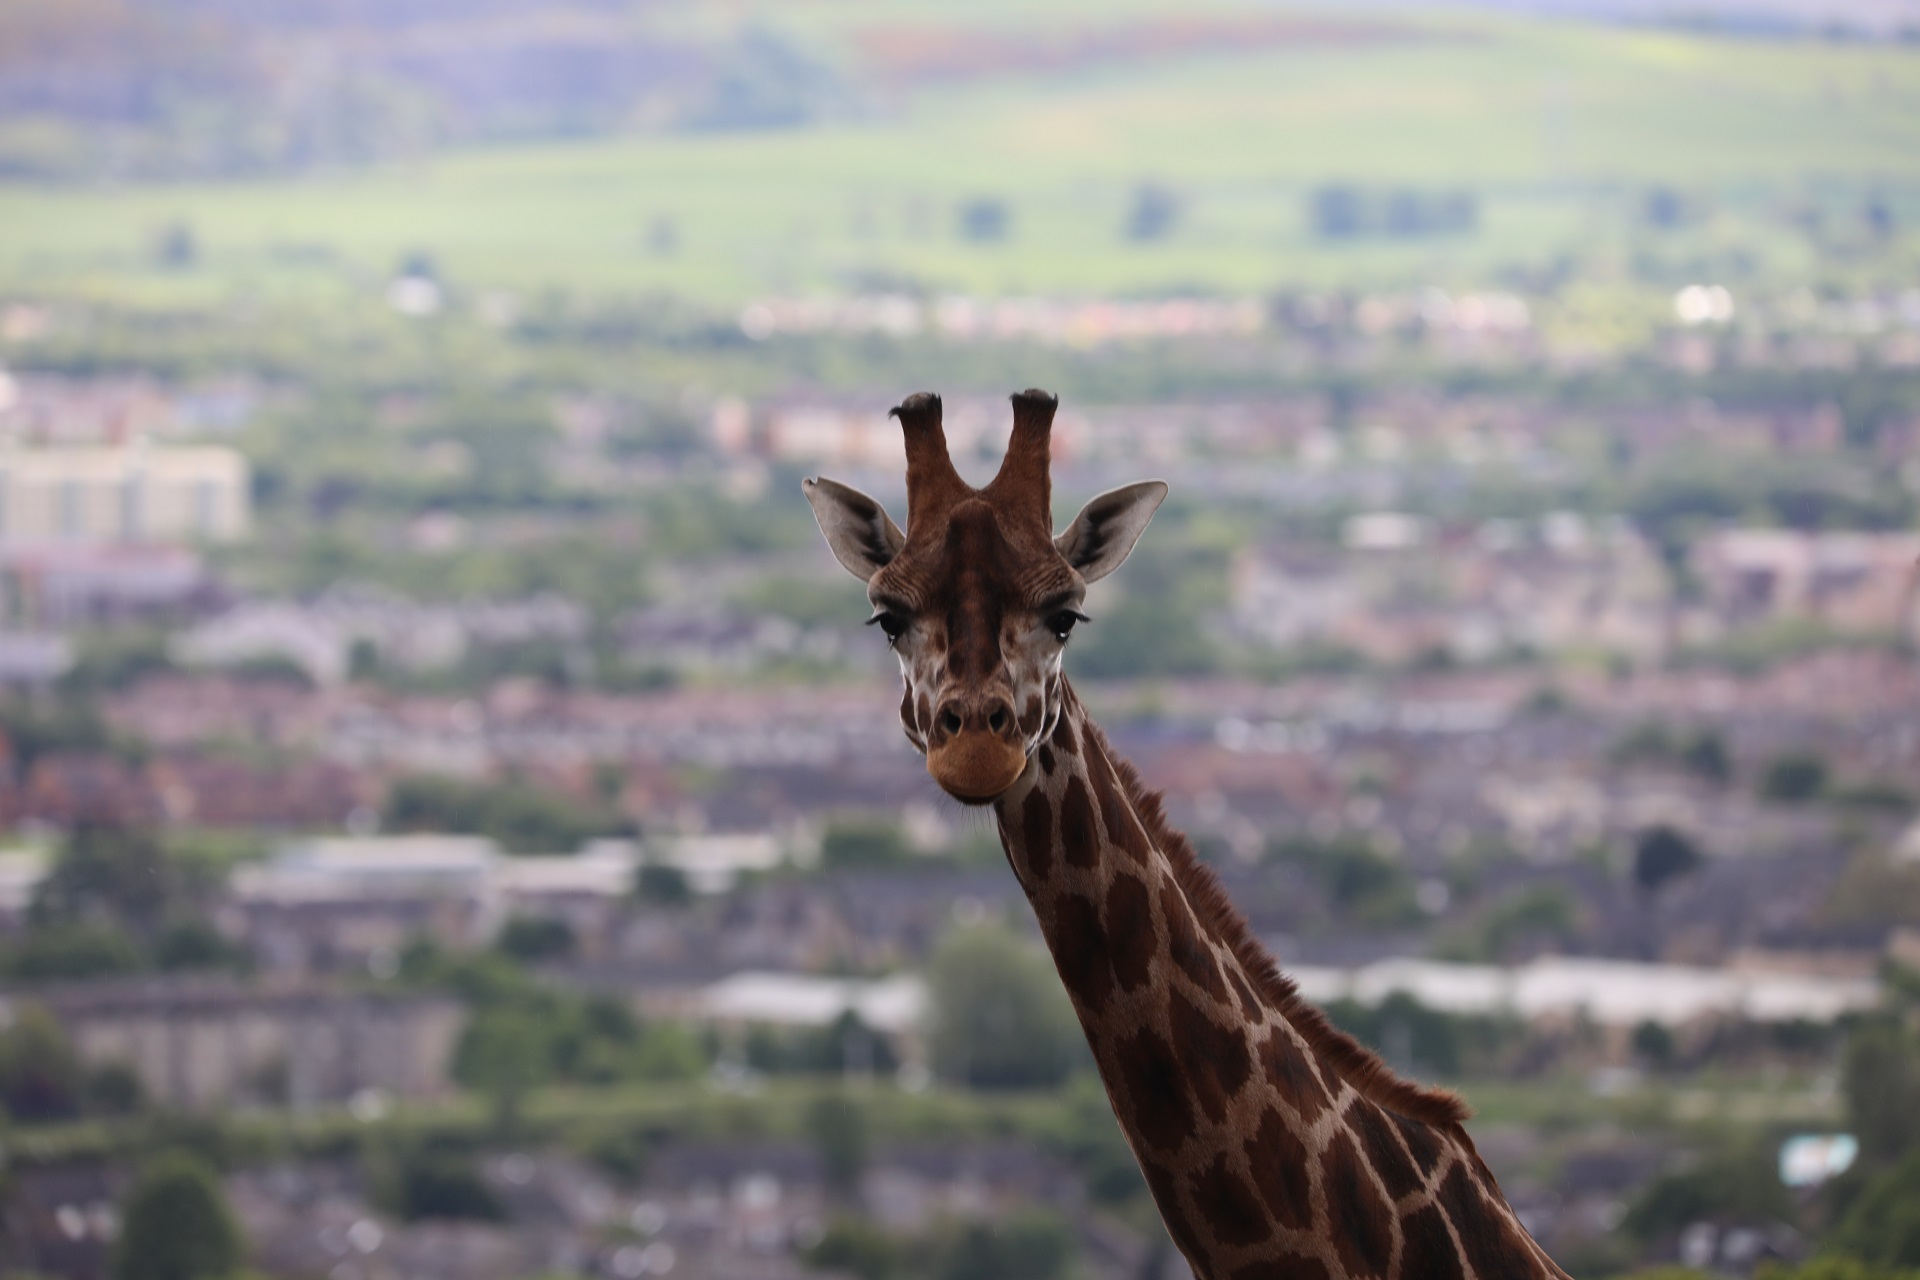 Giraffe looking at camera

IMAGE: Amy Middleton 2022